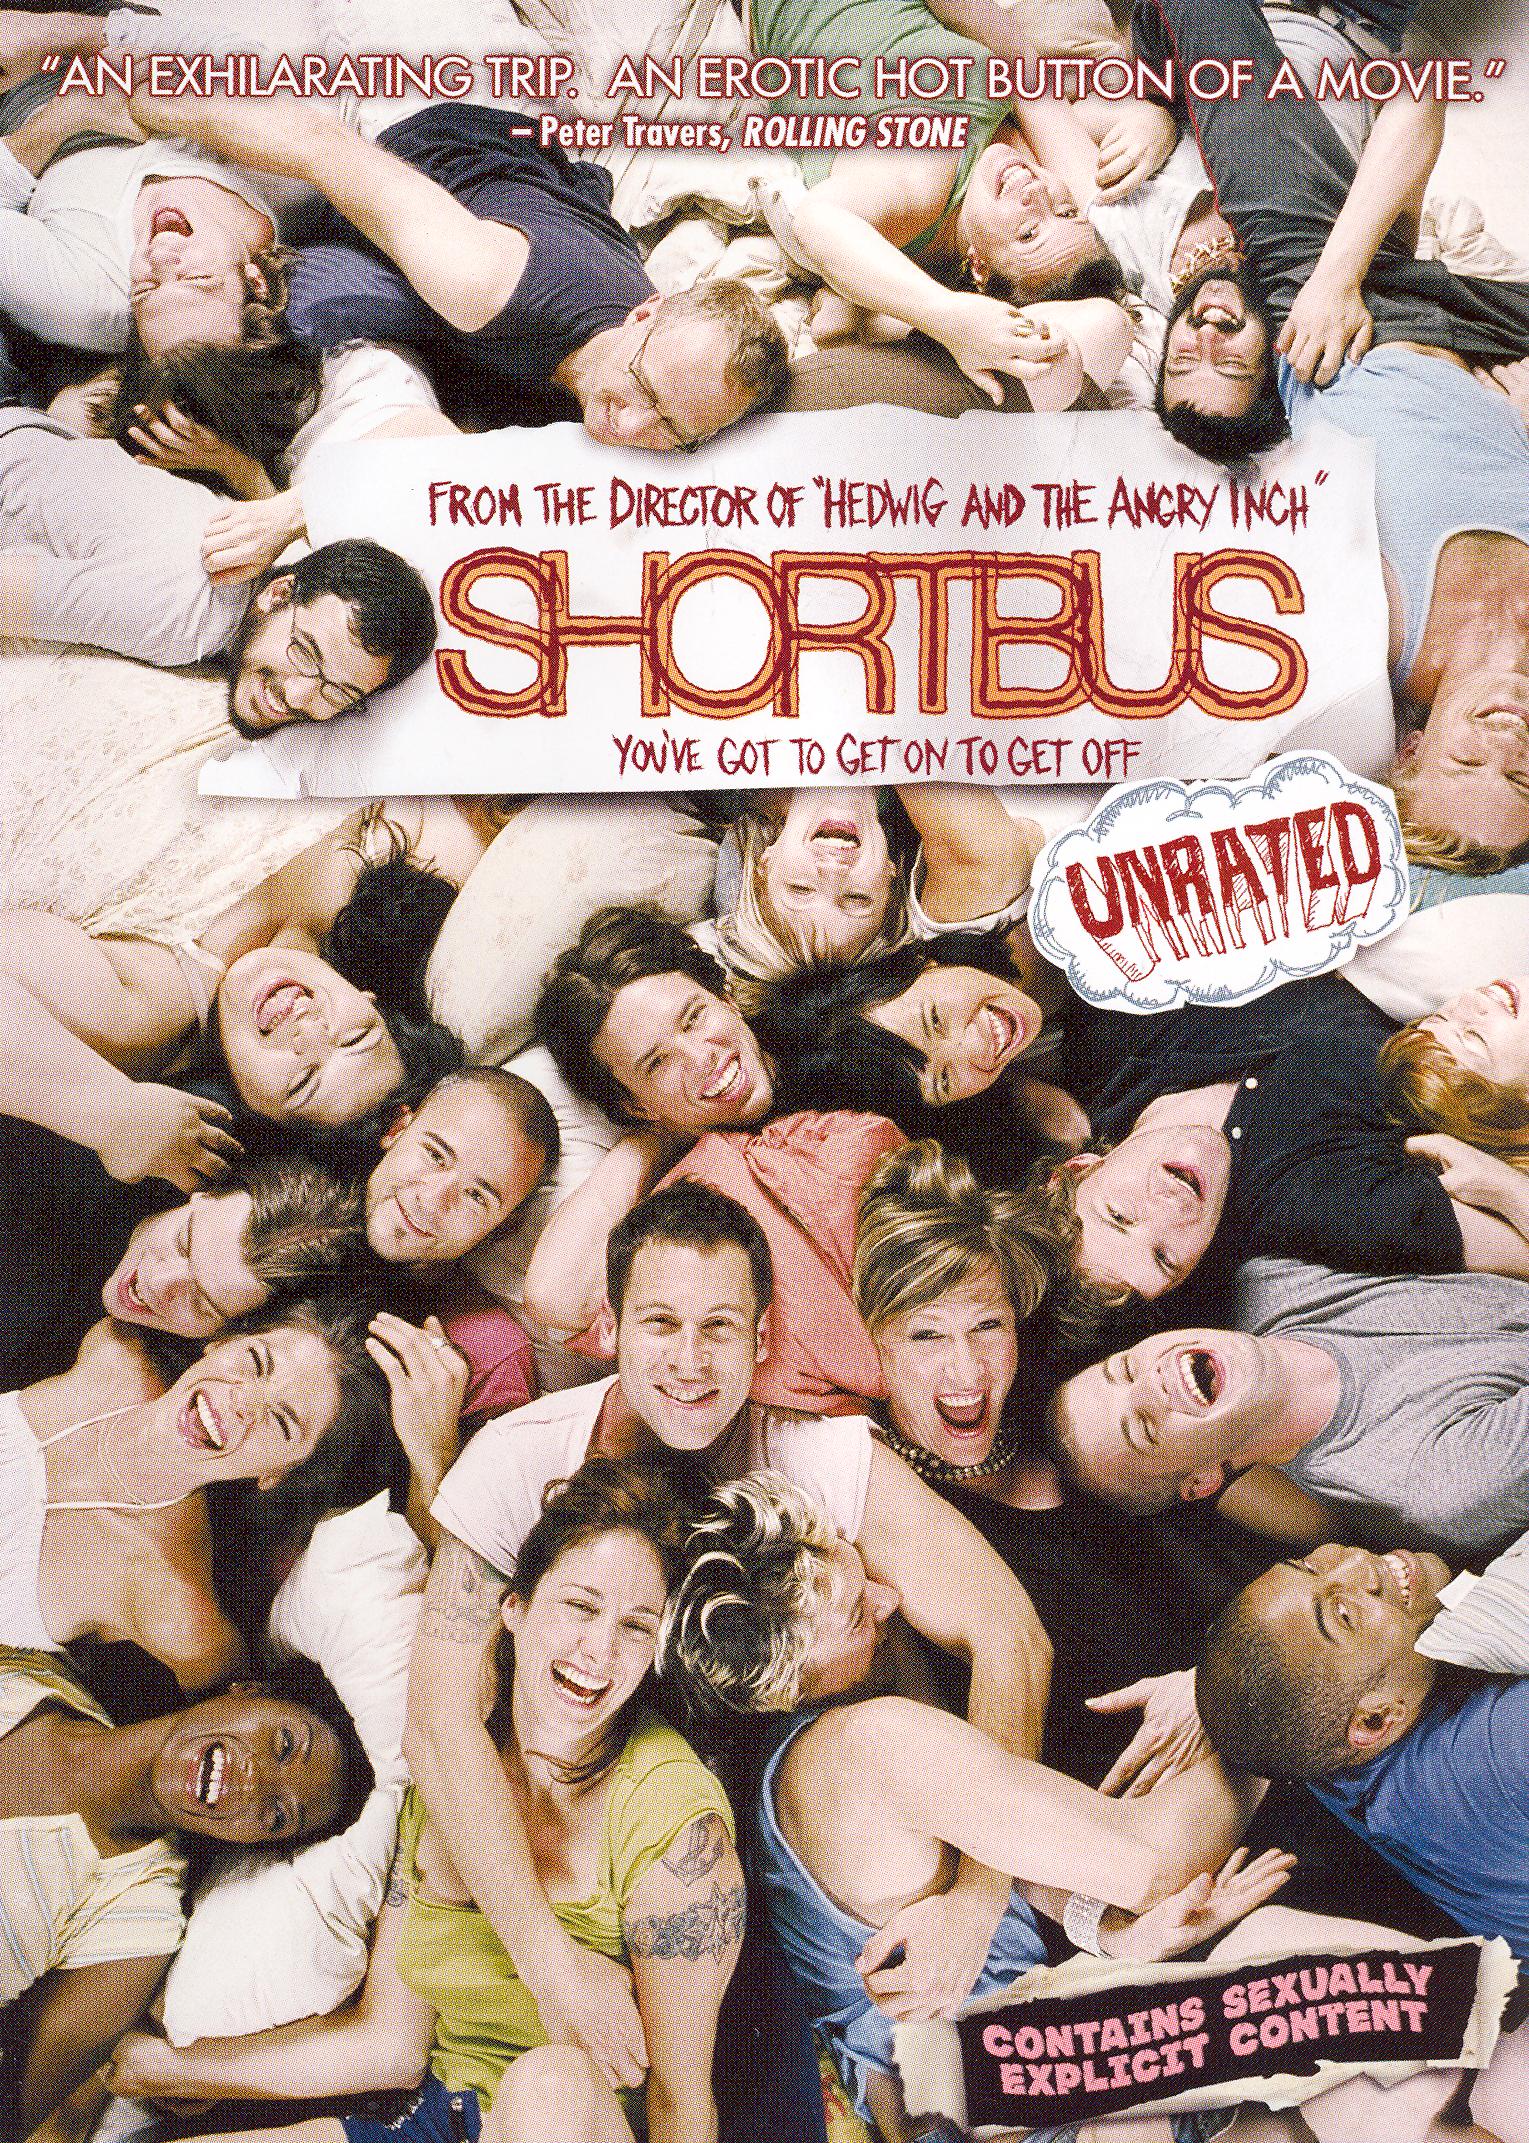 Best of Shortbus full movie download